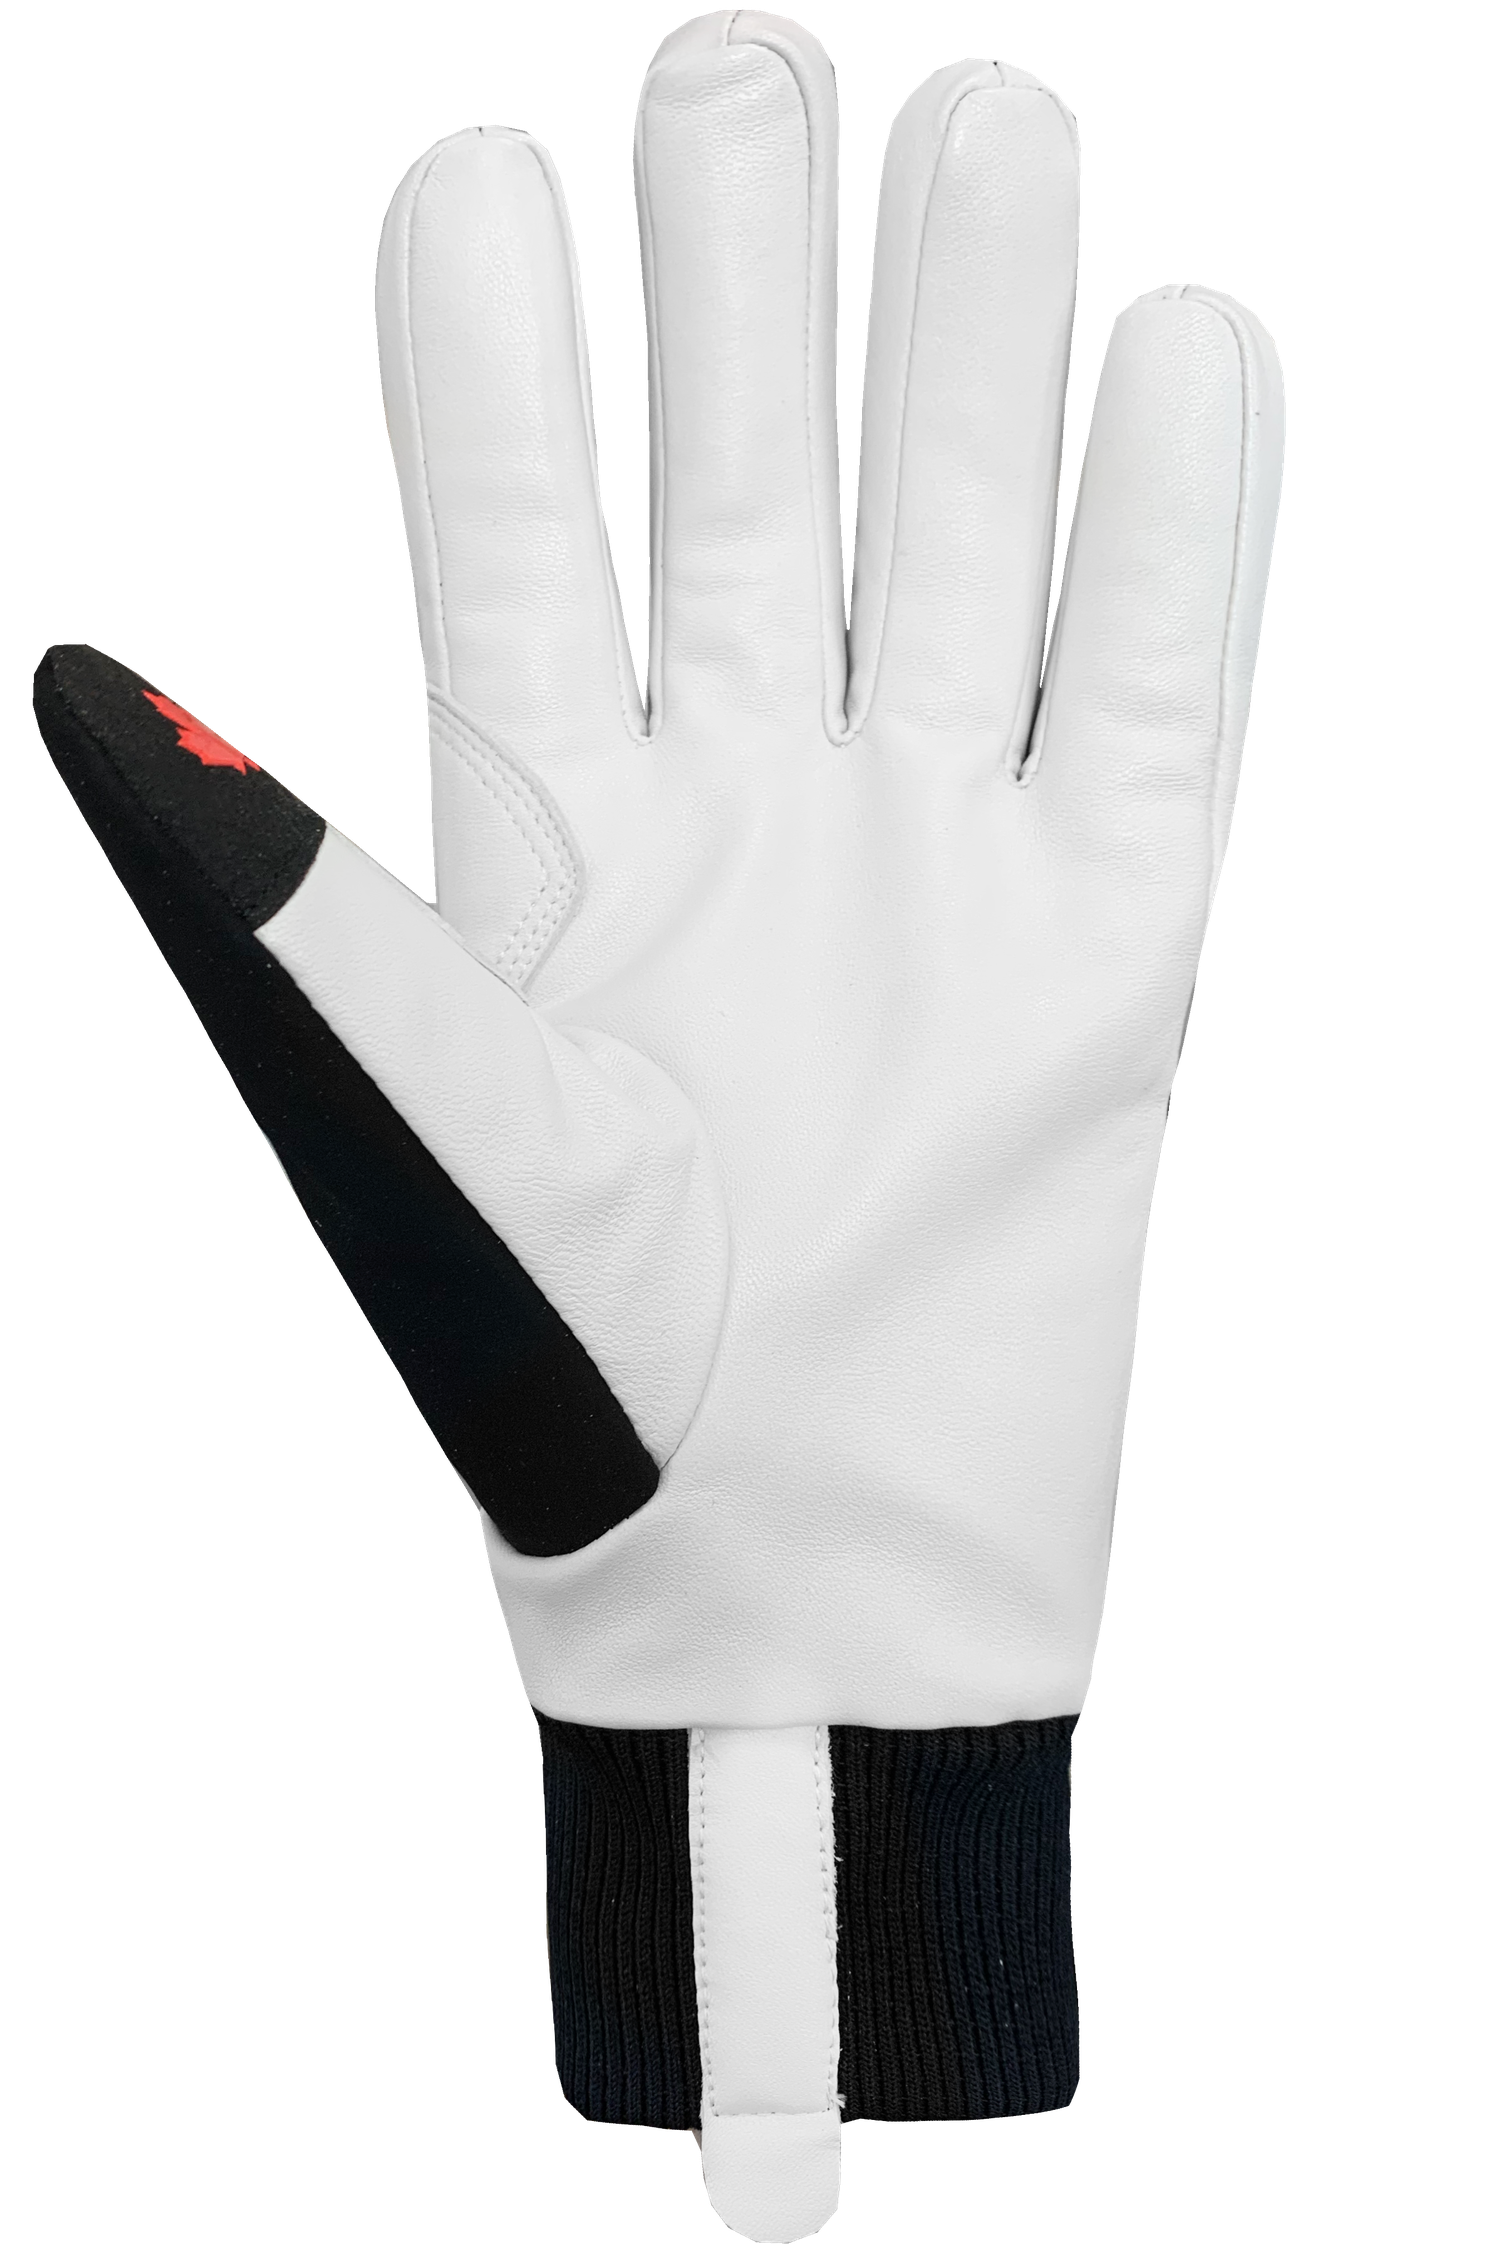 Stormi Gloves - Women, Black/White